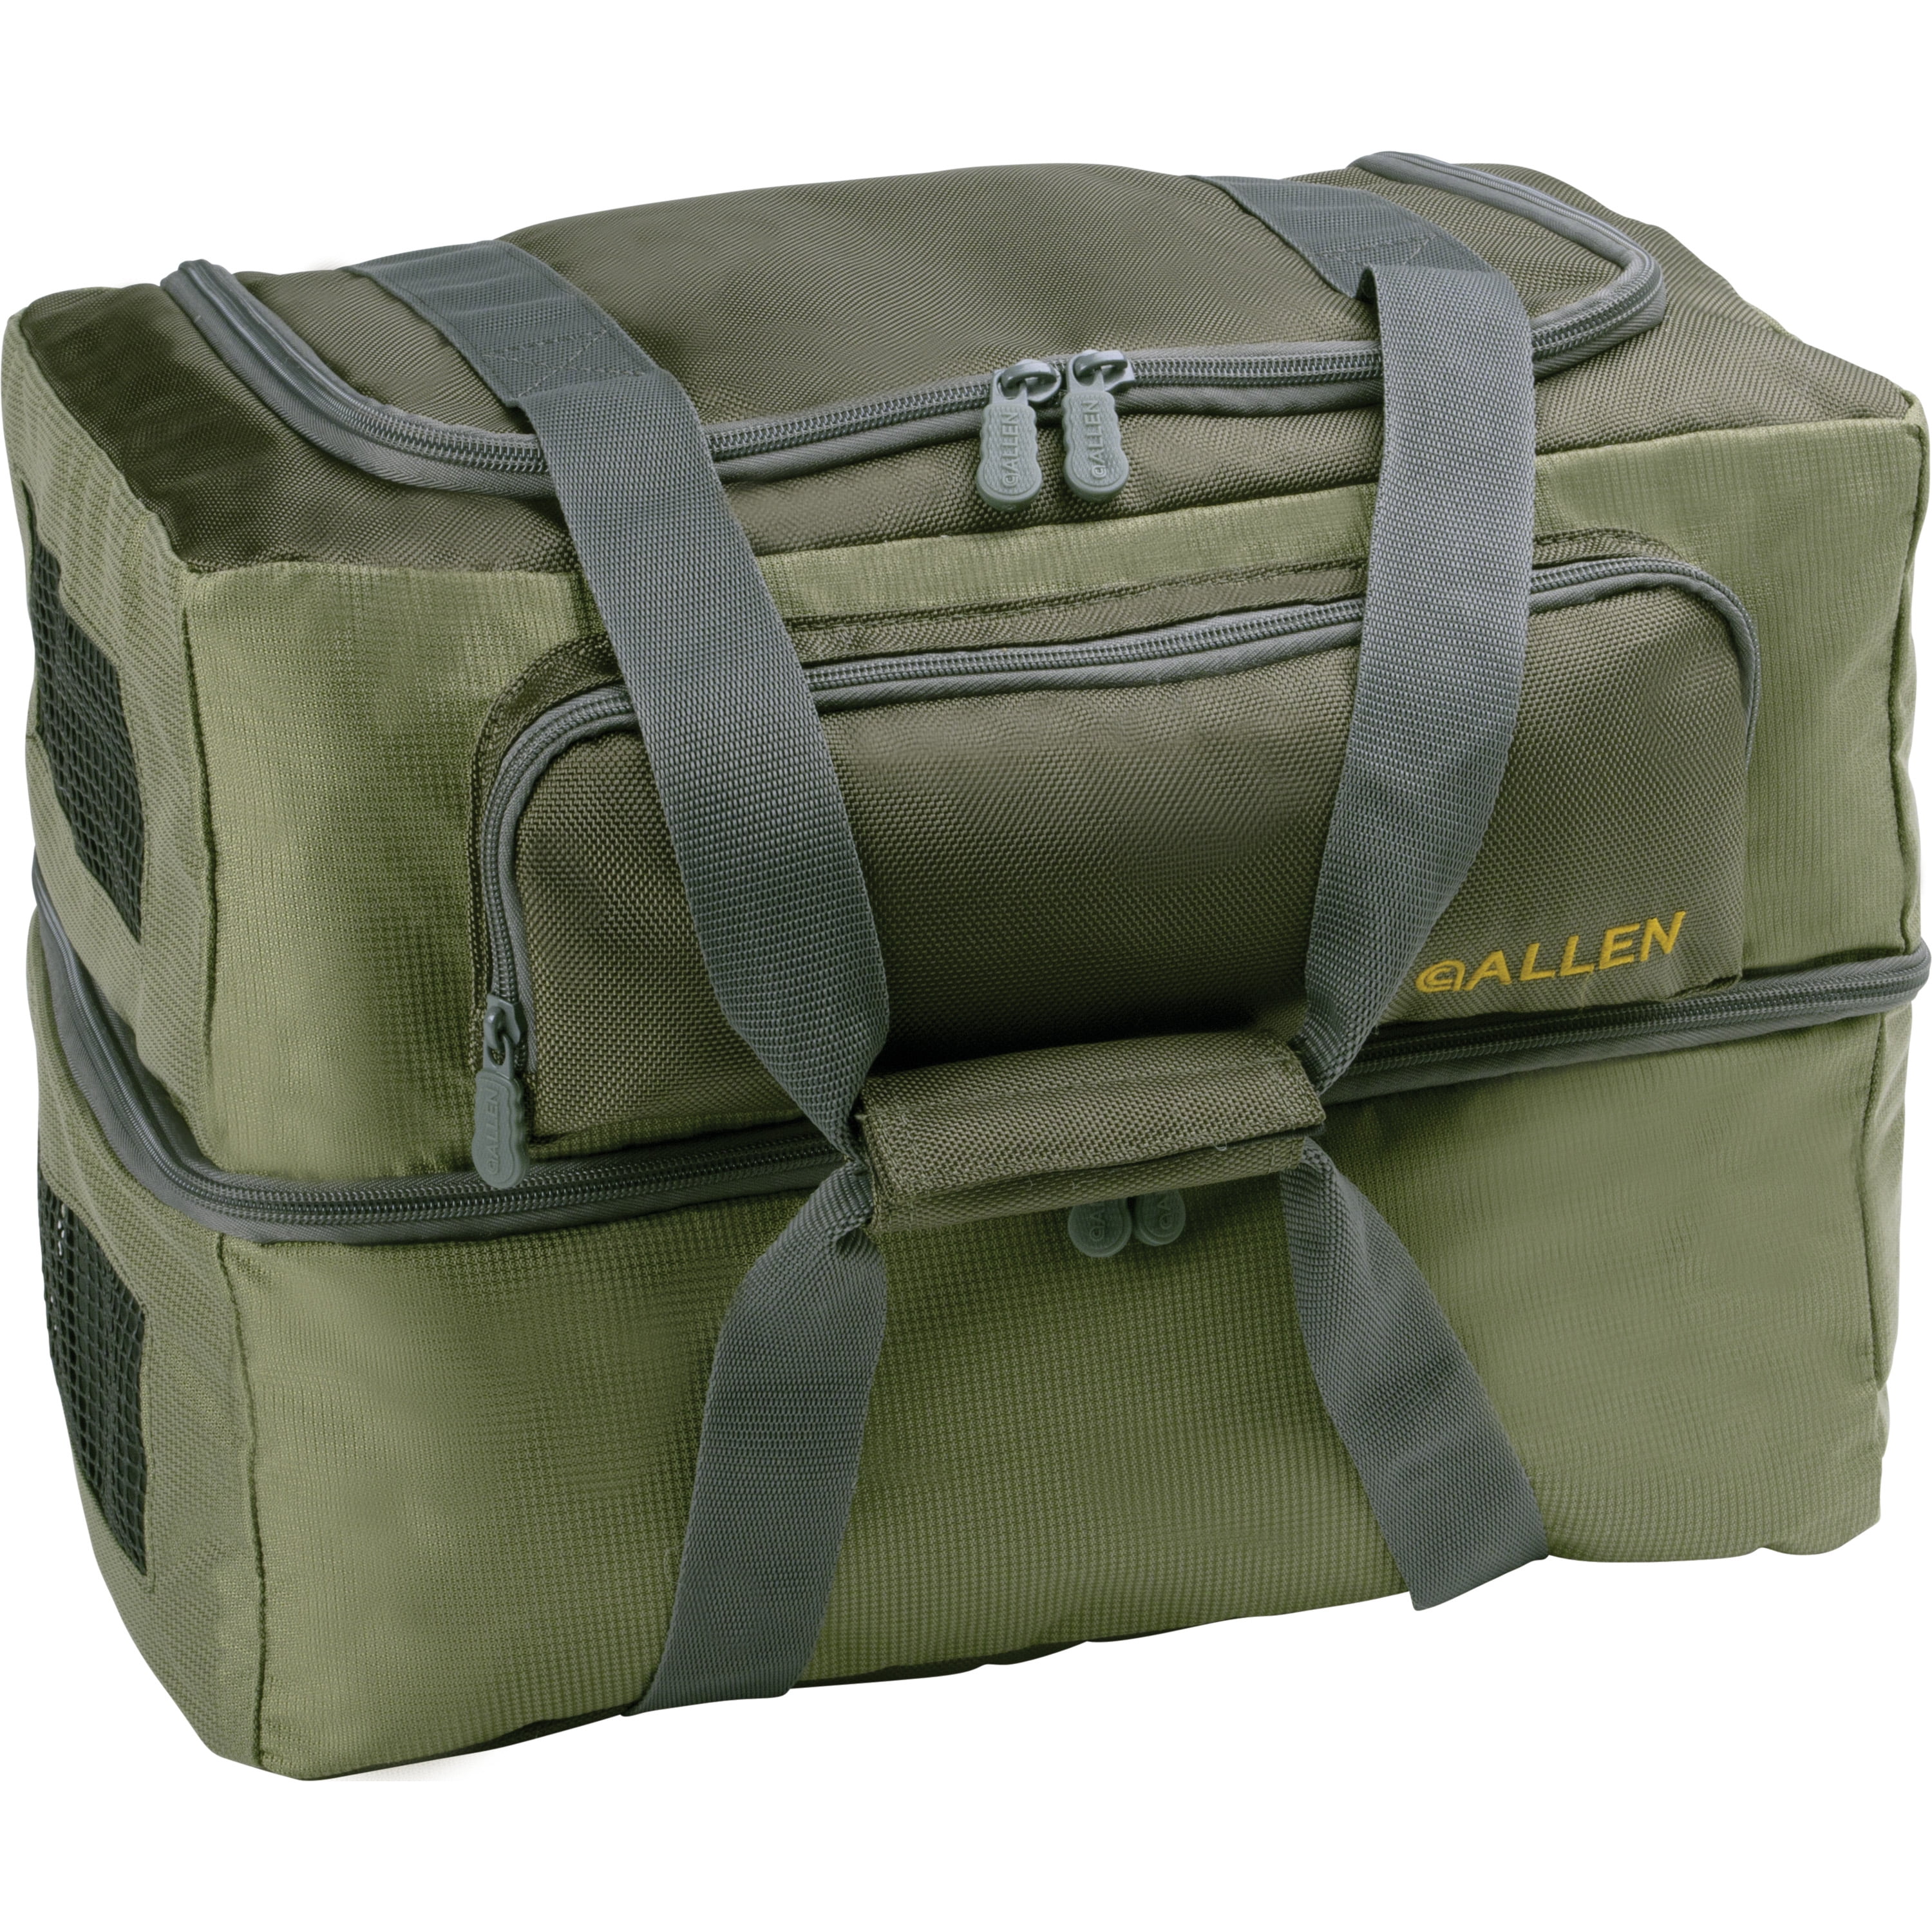 Outdoor Fishing Wader Bag Storage Holder Carry Storage Hunting Duffle Bag Hot 